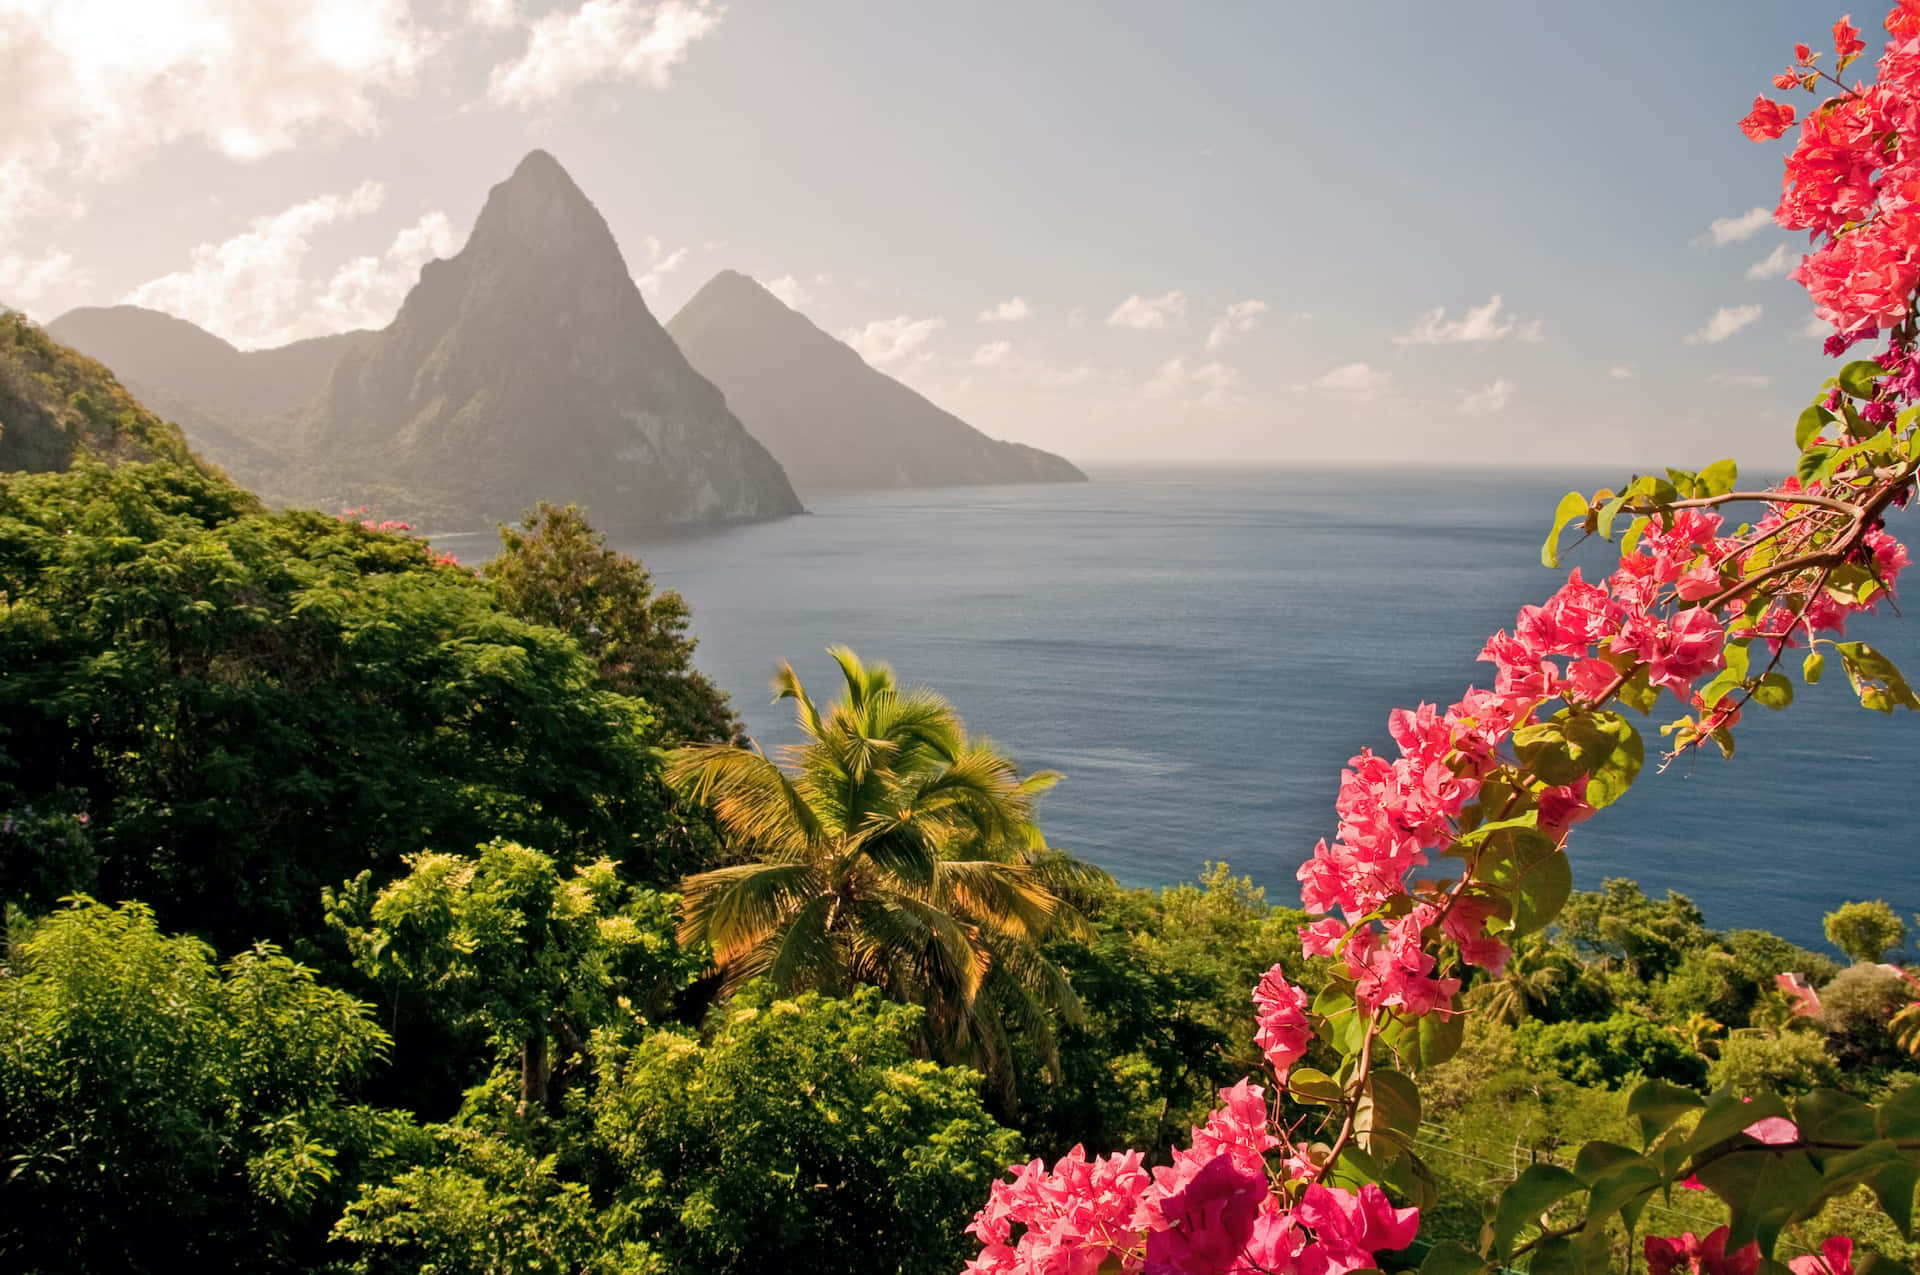 A stunning Caribbean island getaway